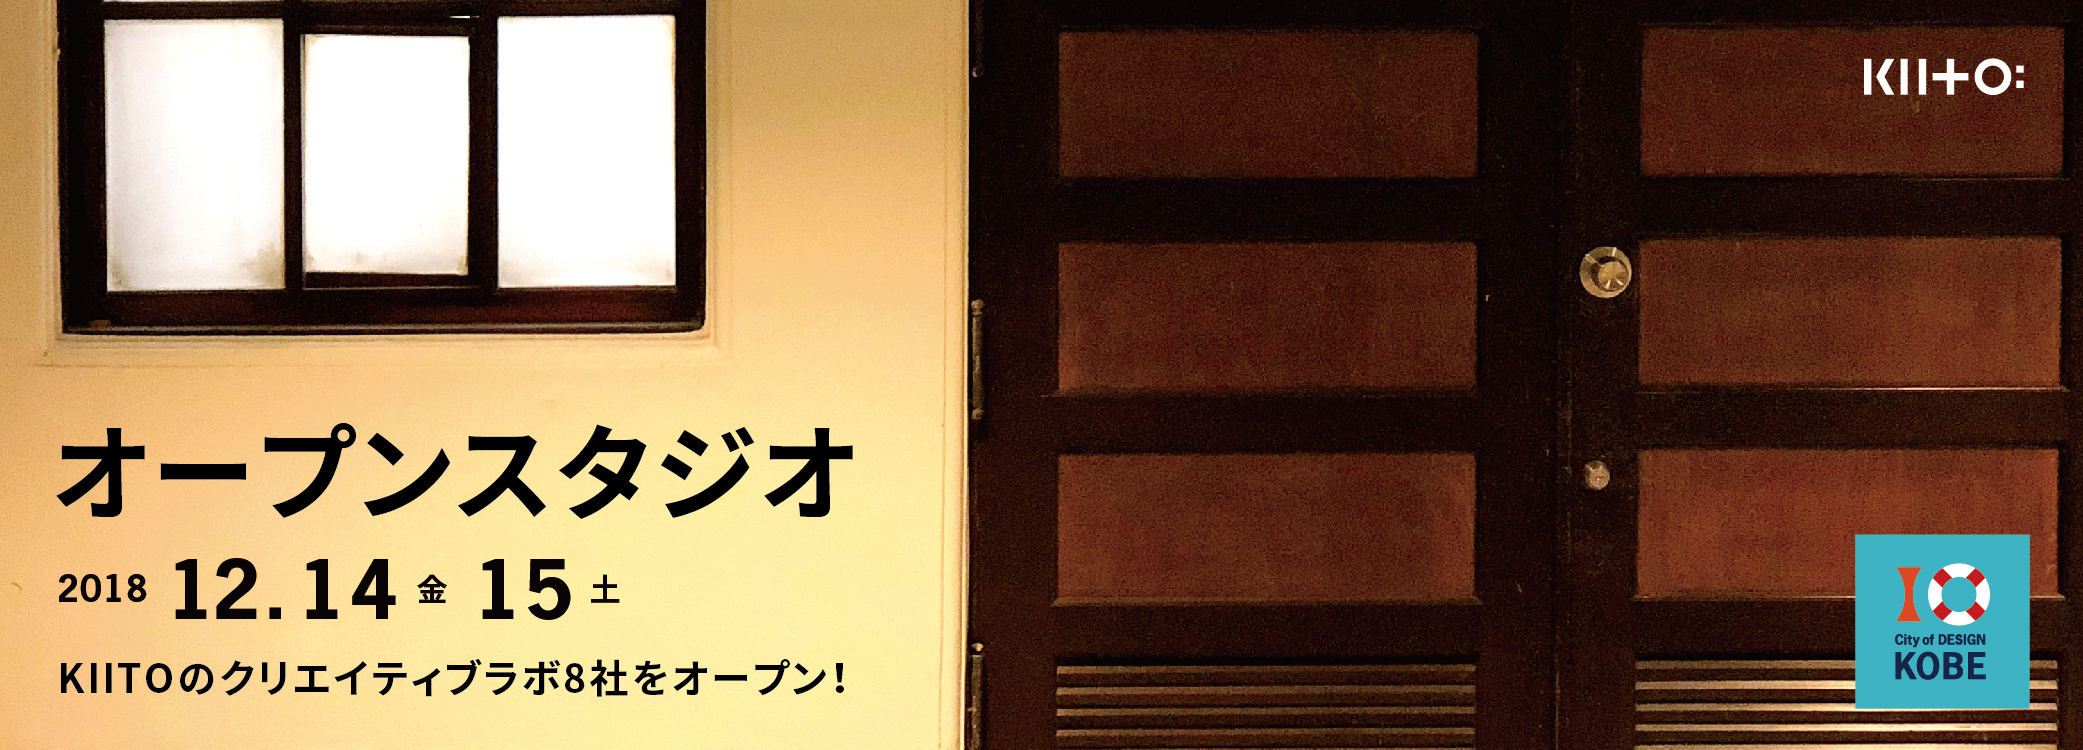 GOOD DESIGN AWARD 神戸展 連動企画「KIITOオープンスタジオ」